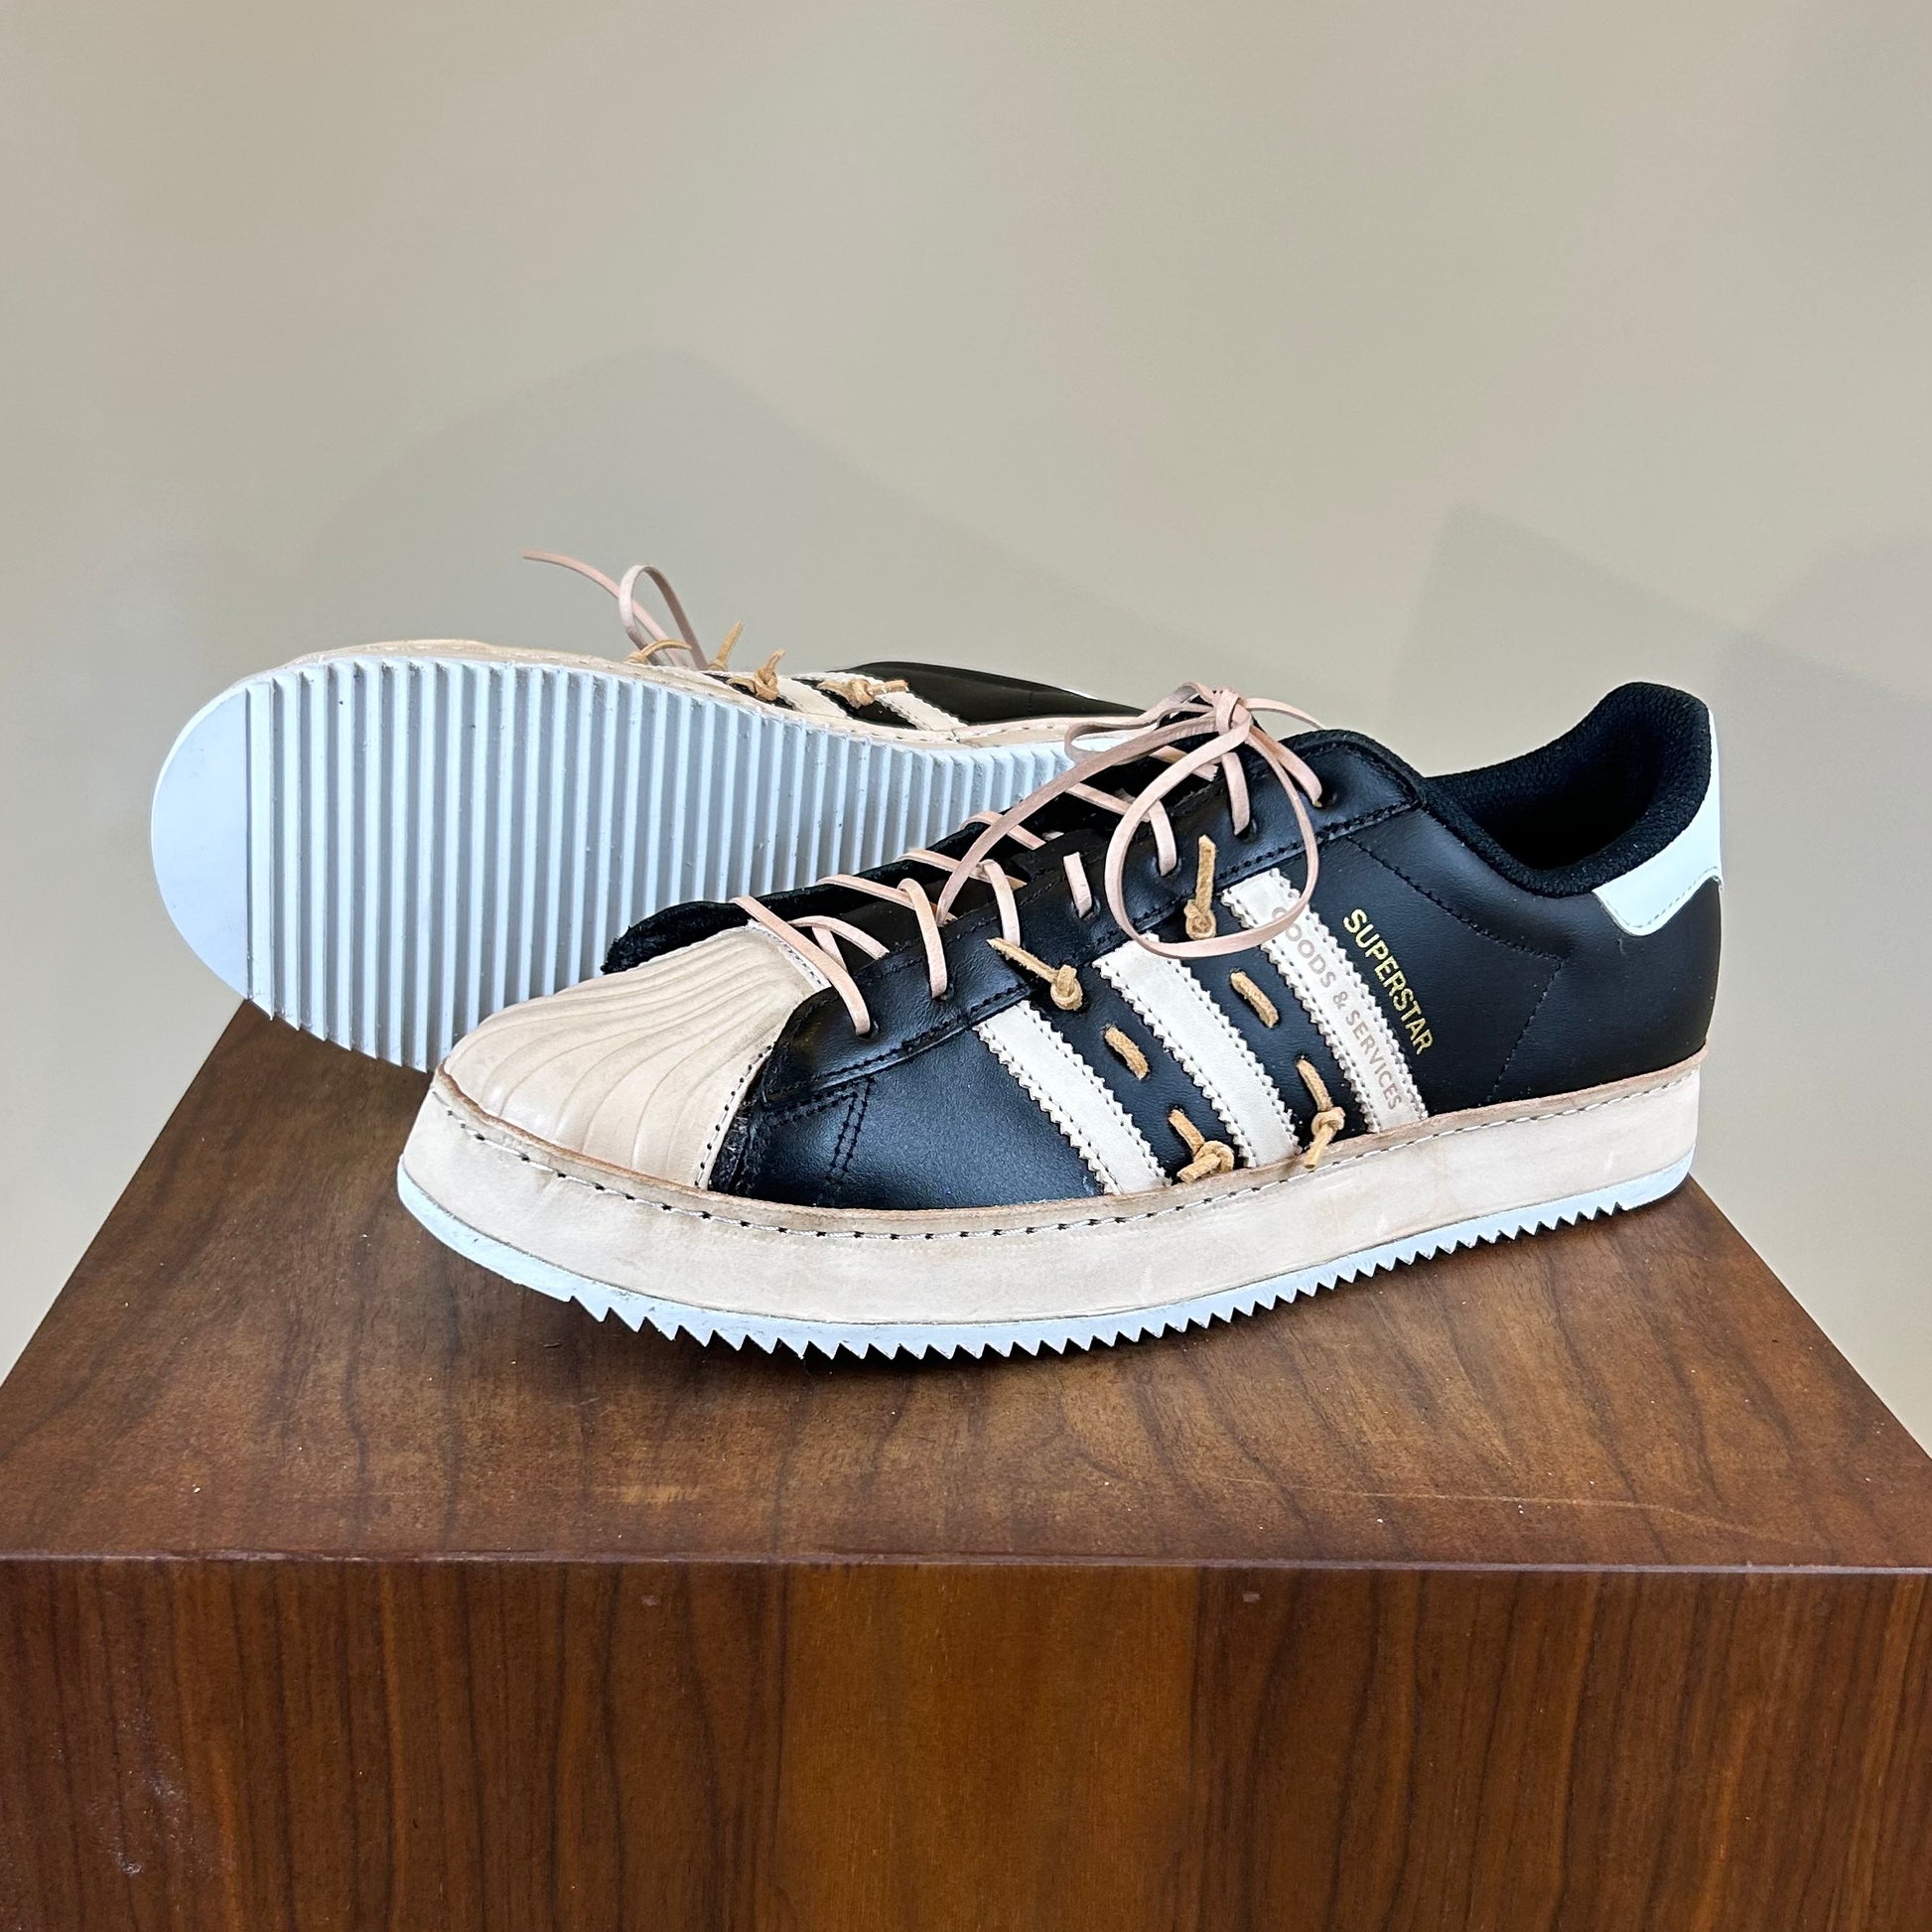 Adidas Superstar Handmade Resole – Goods Services